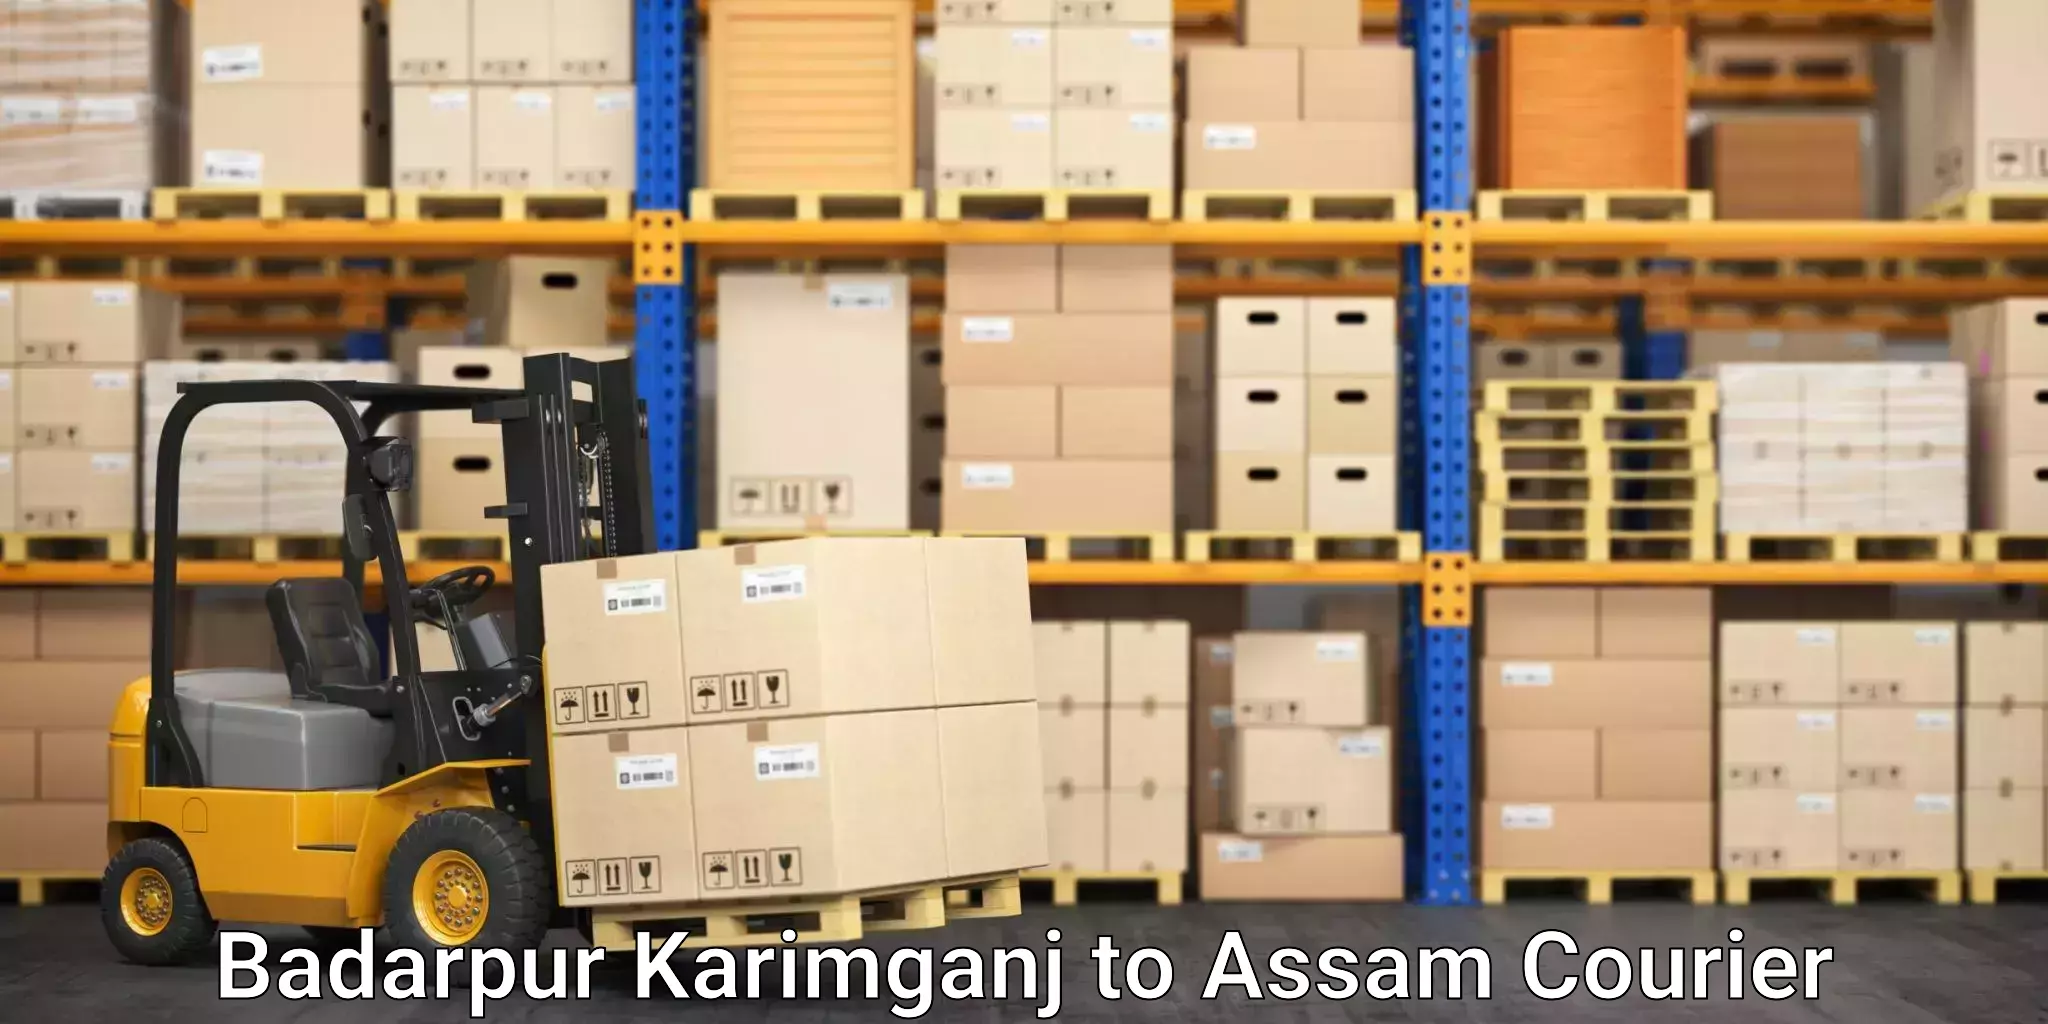 Efficient parcel service Badarpur Karimganj to Dibrugarh